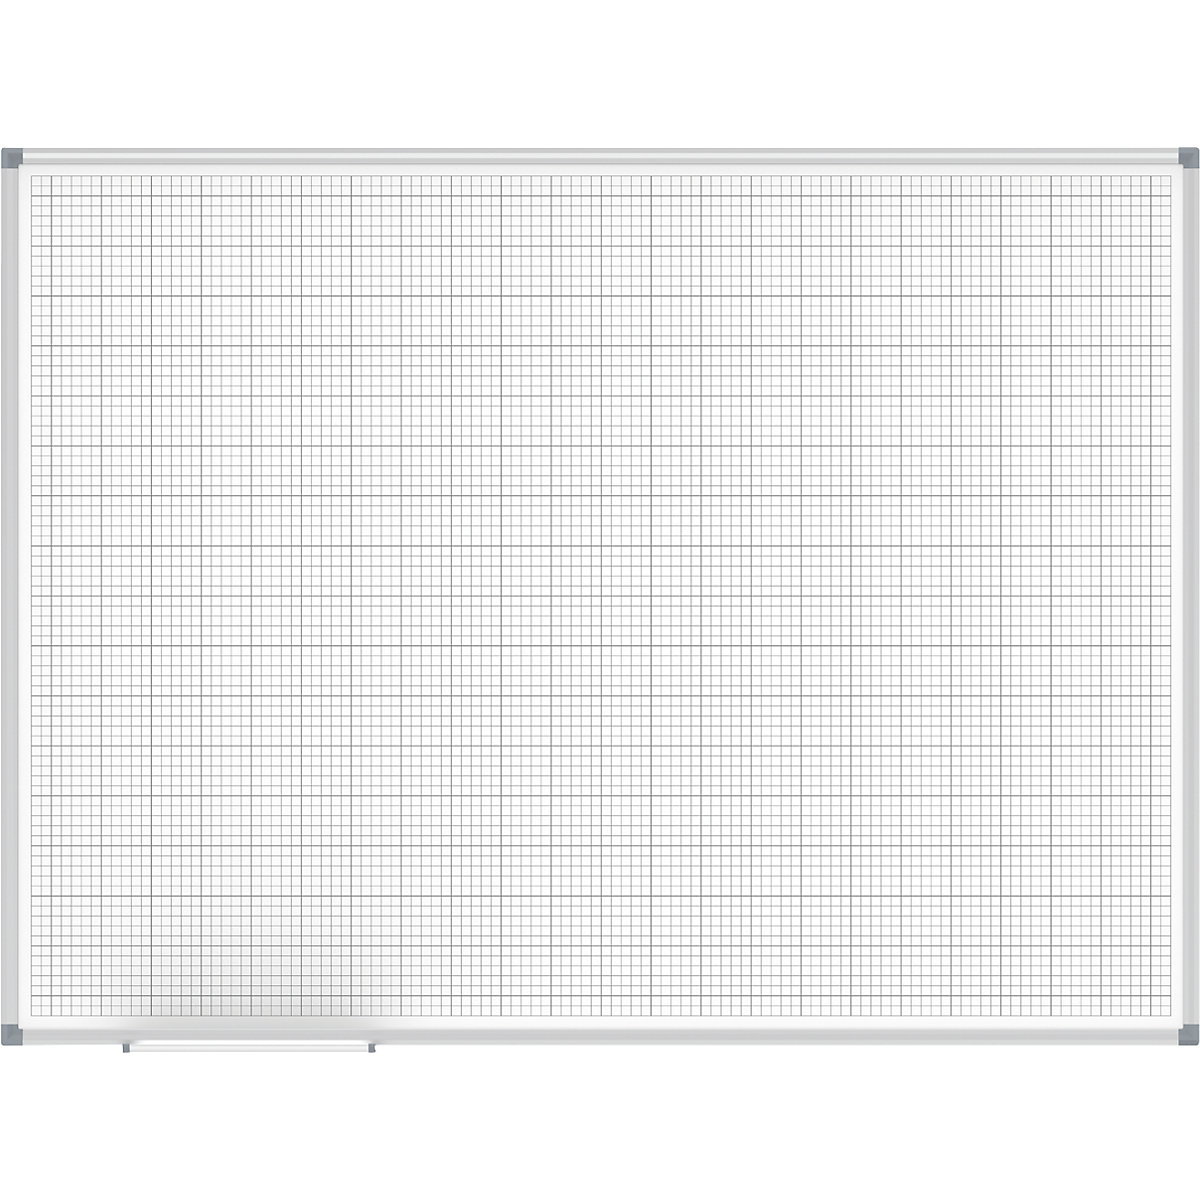 Tablero reticulado MAULstandard, blanco – MAUL, retícula de 10 x 10 / 50 x 50 mm, A x H 1200 x 900 mm-2